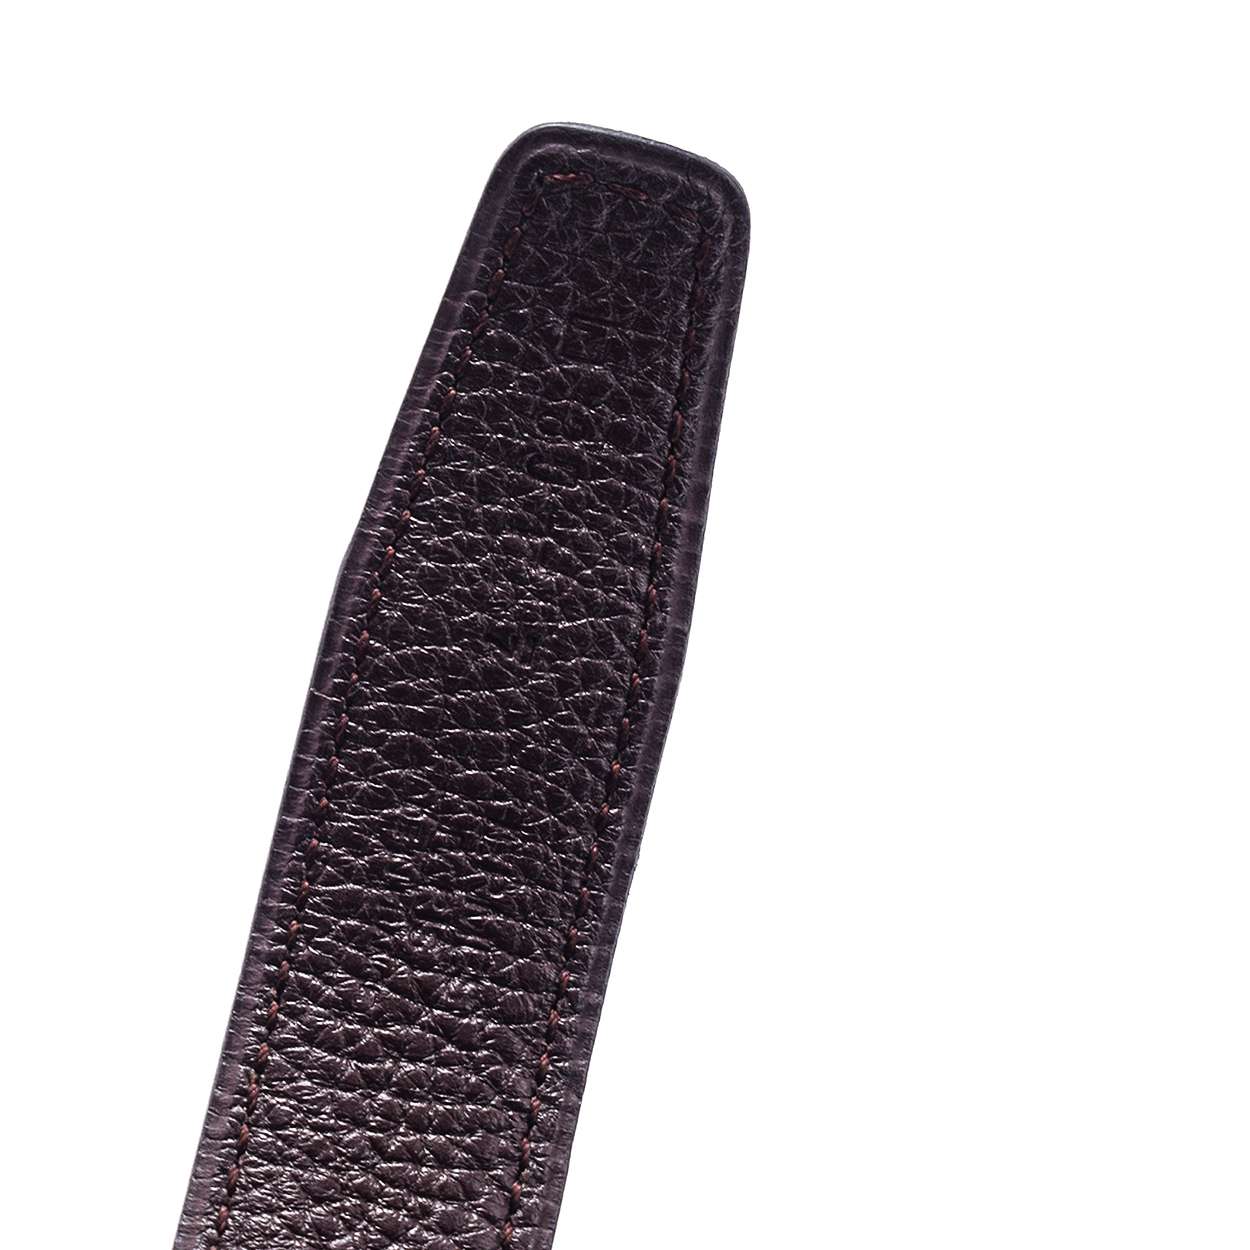 Hermes - Black / Dark Brown Calfskin Leather Belt